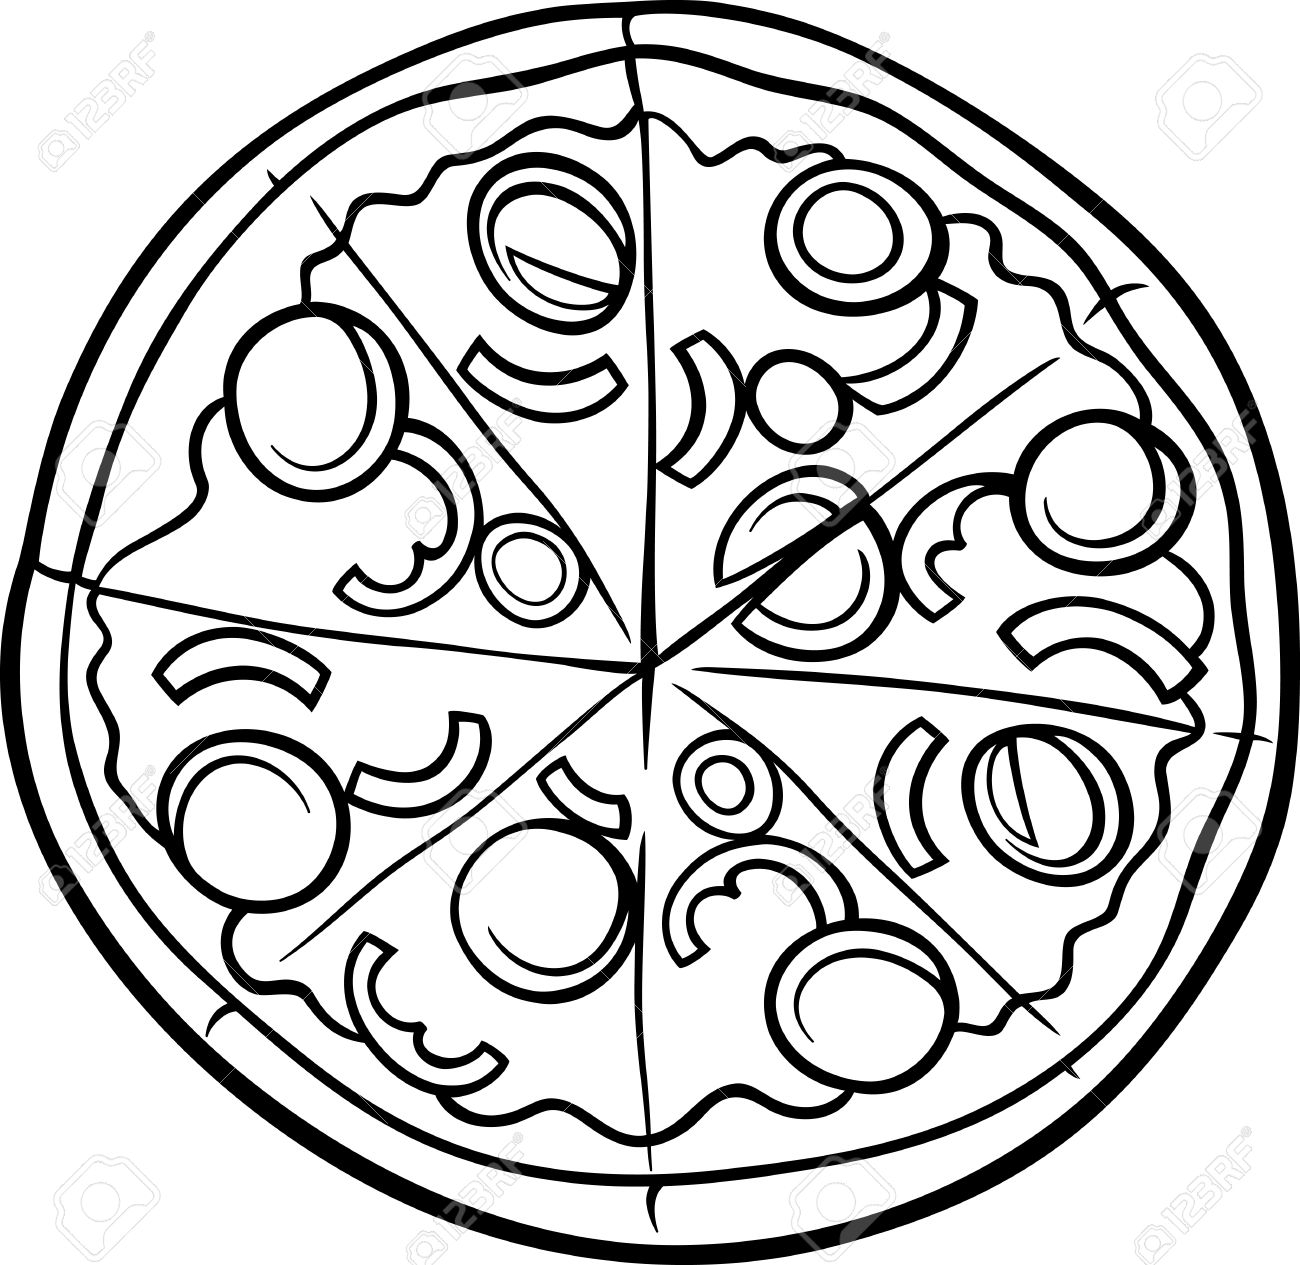 Pie  black and white pizza pie clipart black and white clipartfest